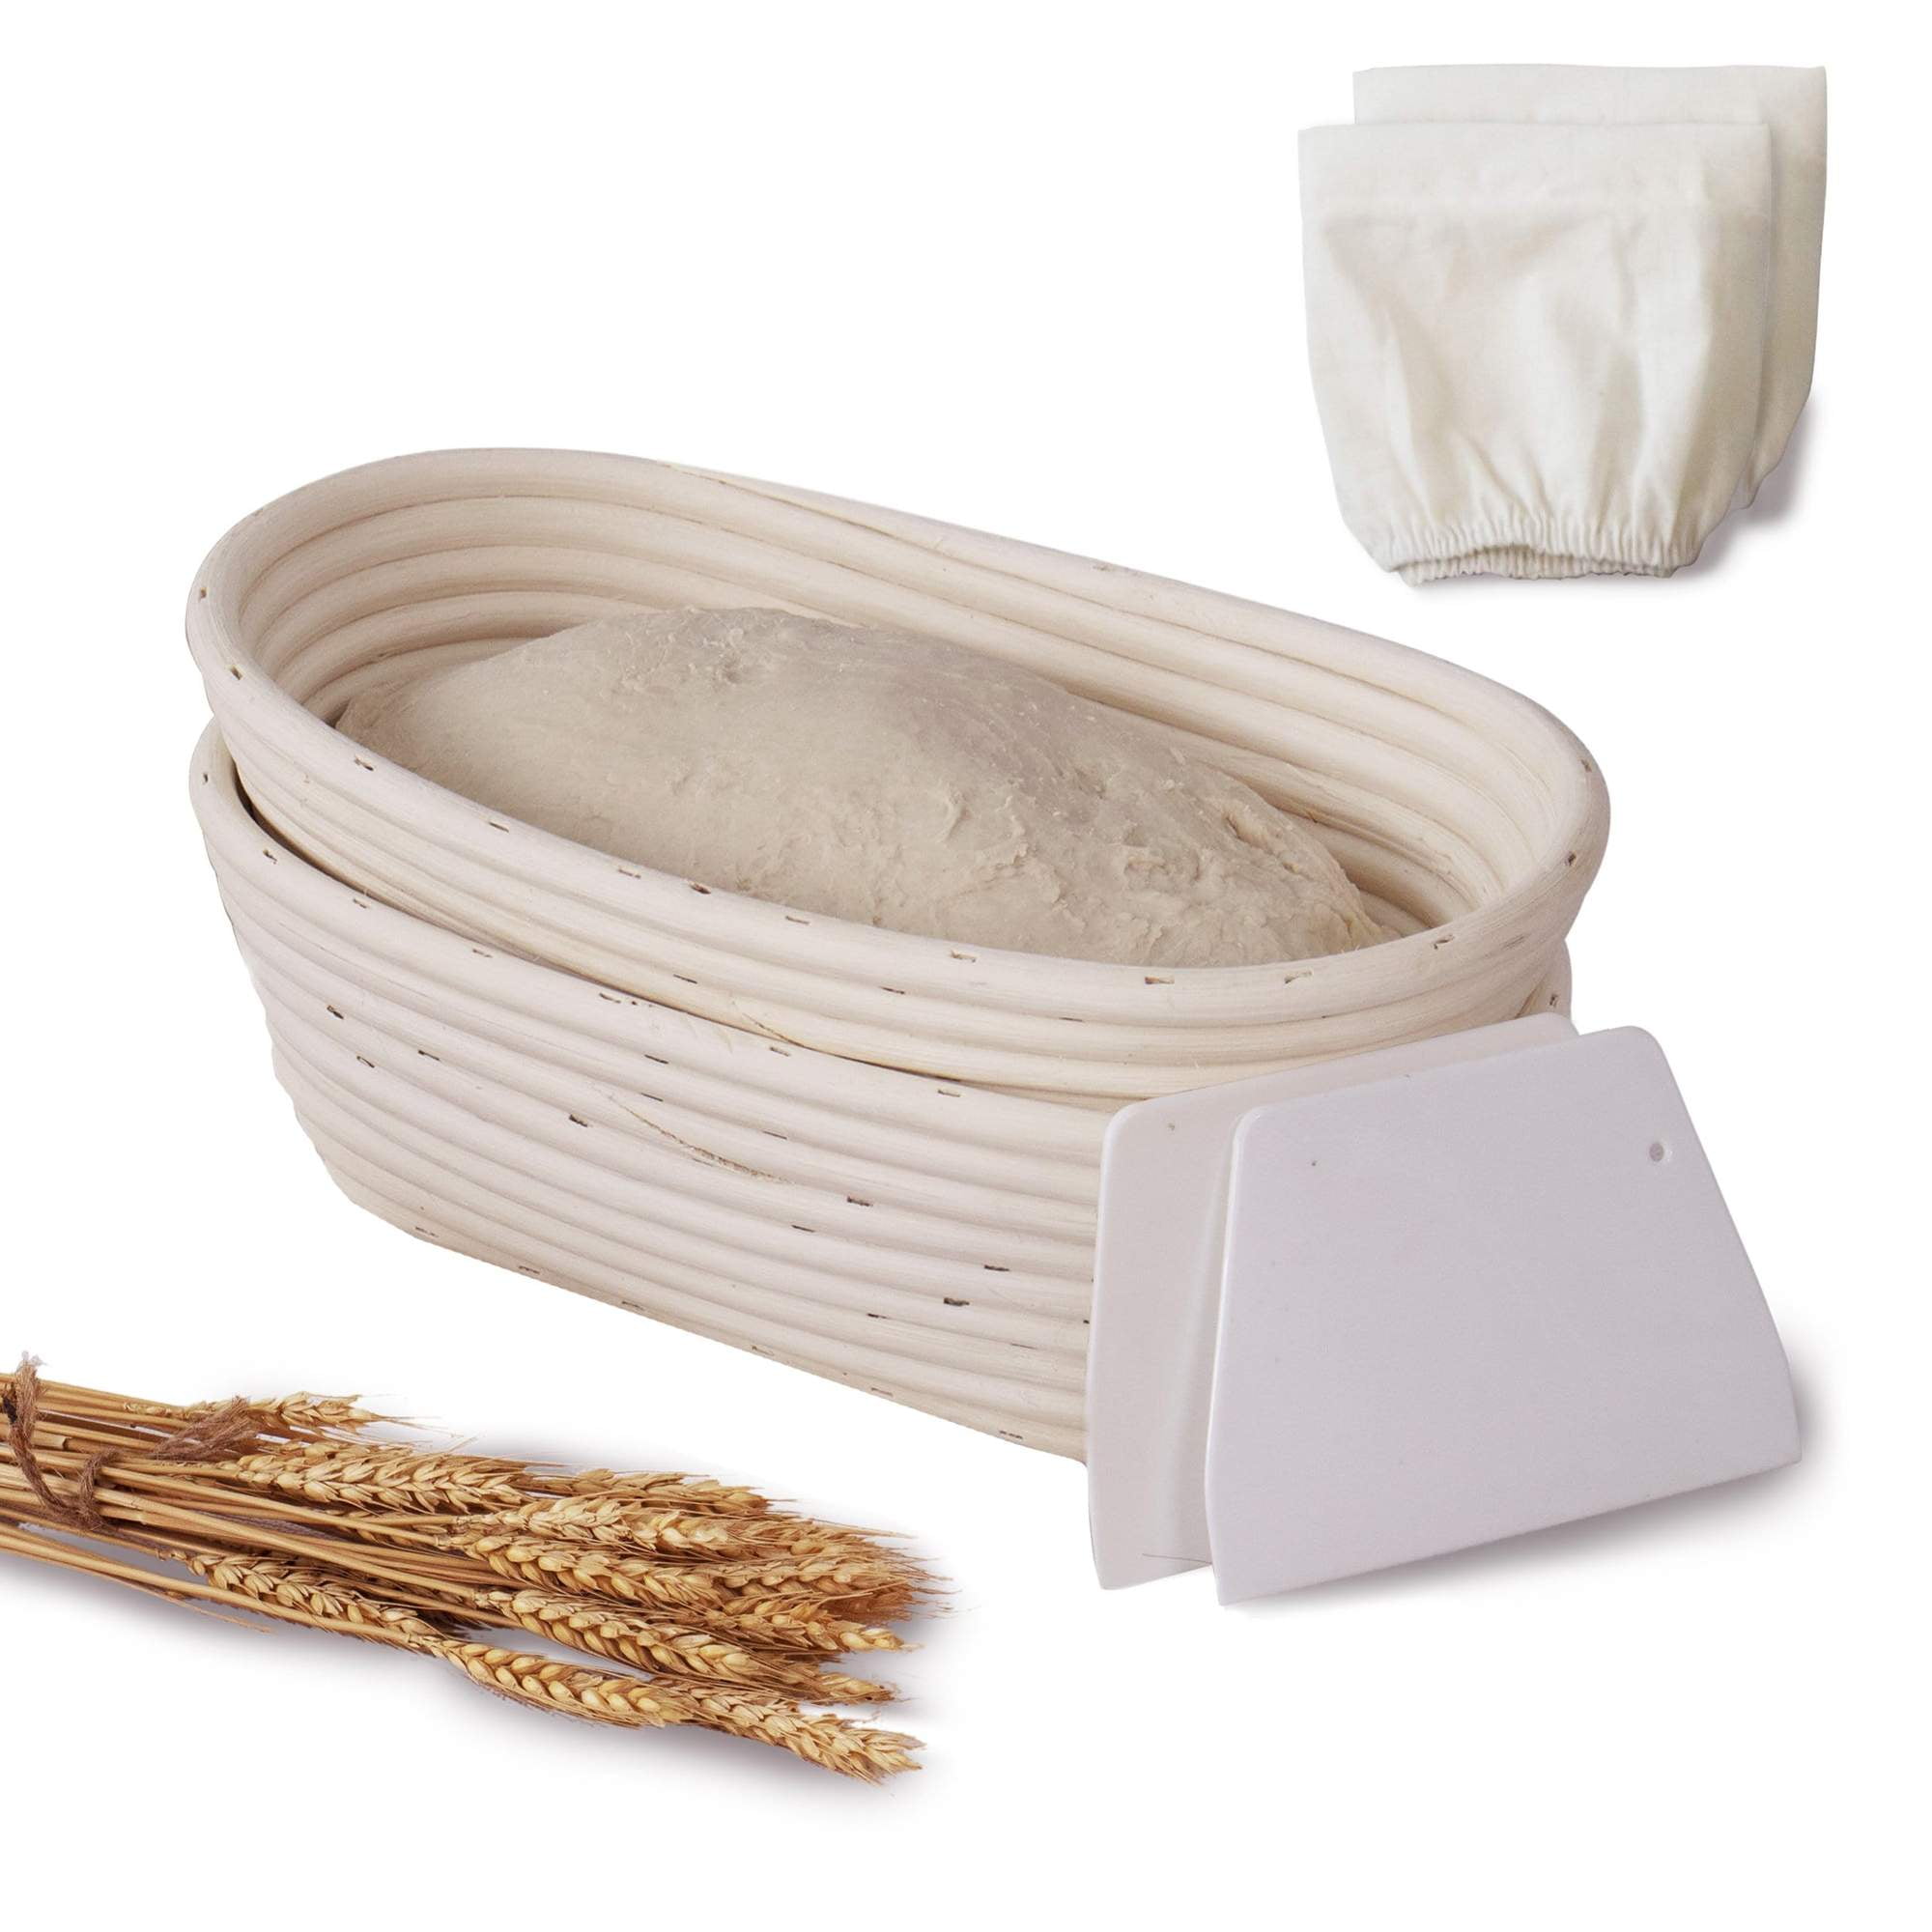 Pack of 2 28cm/11 Oval Banneton Brotform Bread Proving Basket Proofing Rising Rattan Basket 